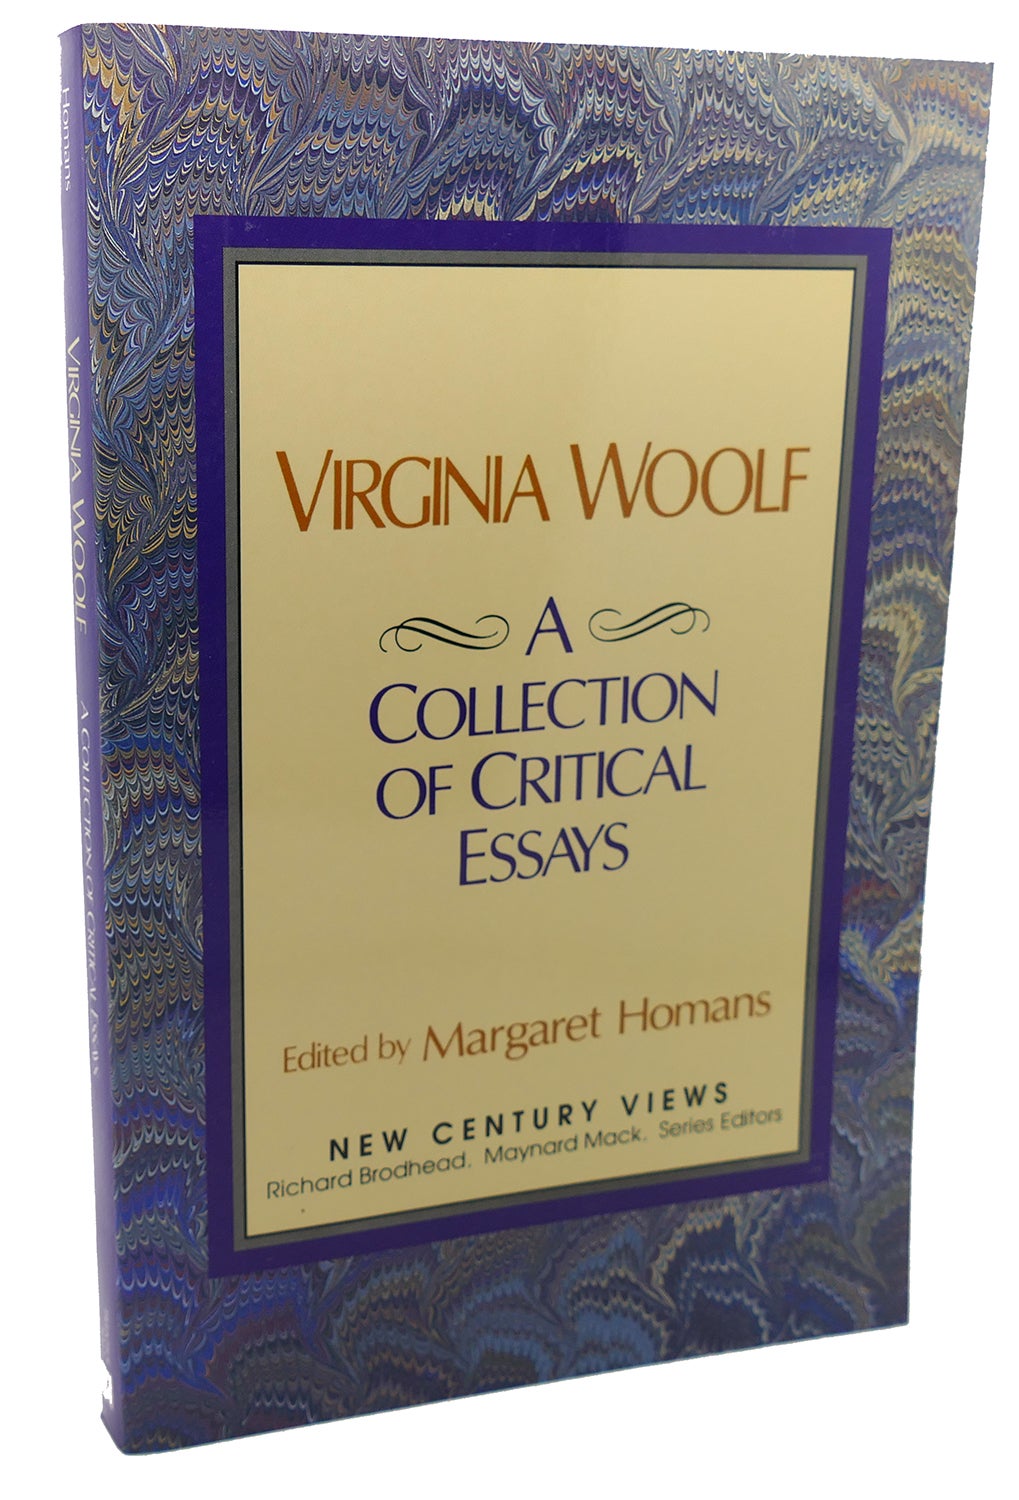 how many essays did virginia woolf write